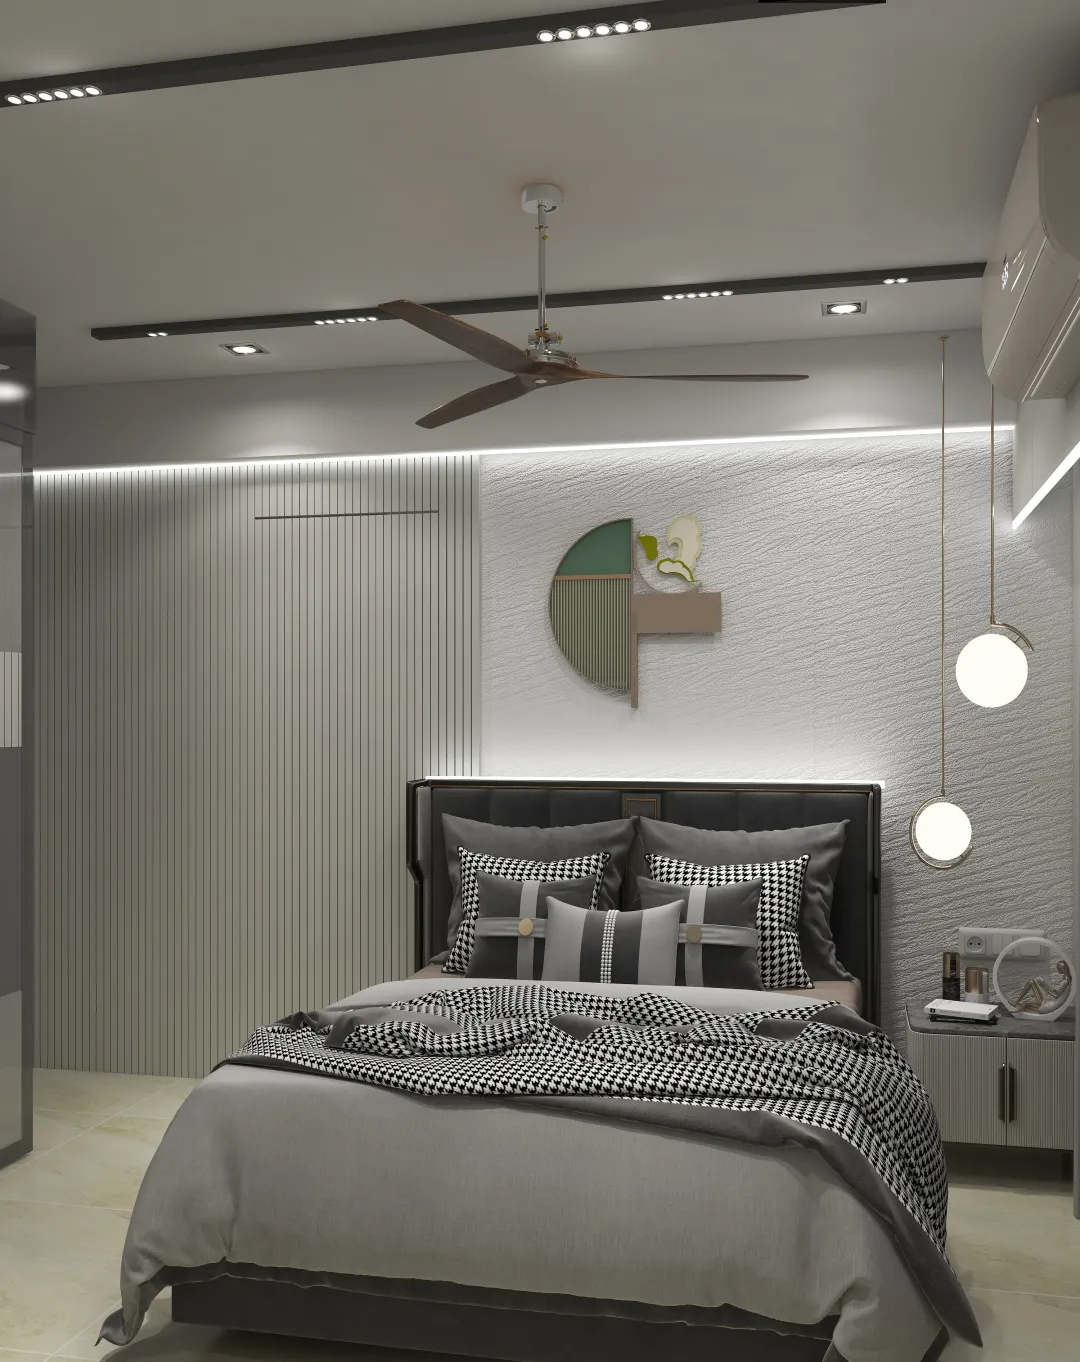 einterio1612的装修设计方案:Master bedroom